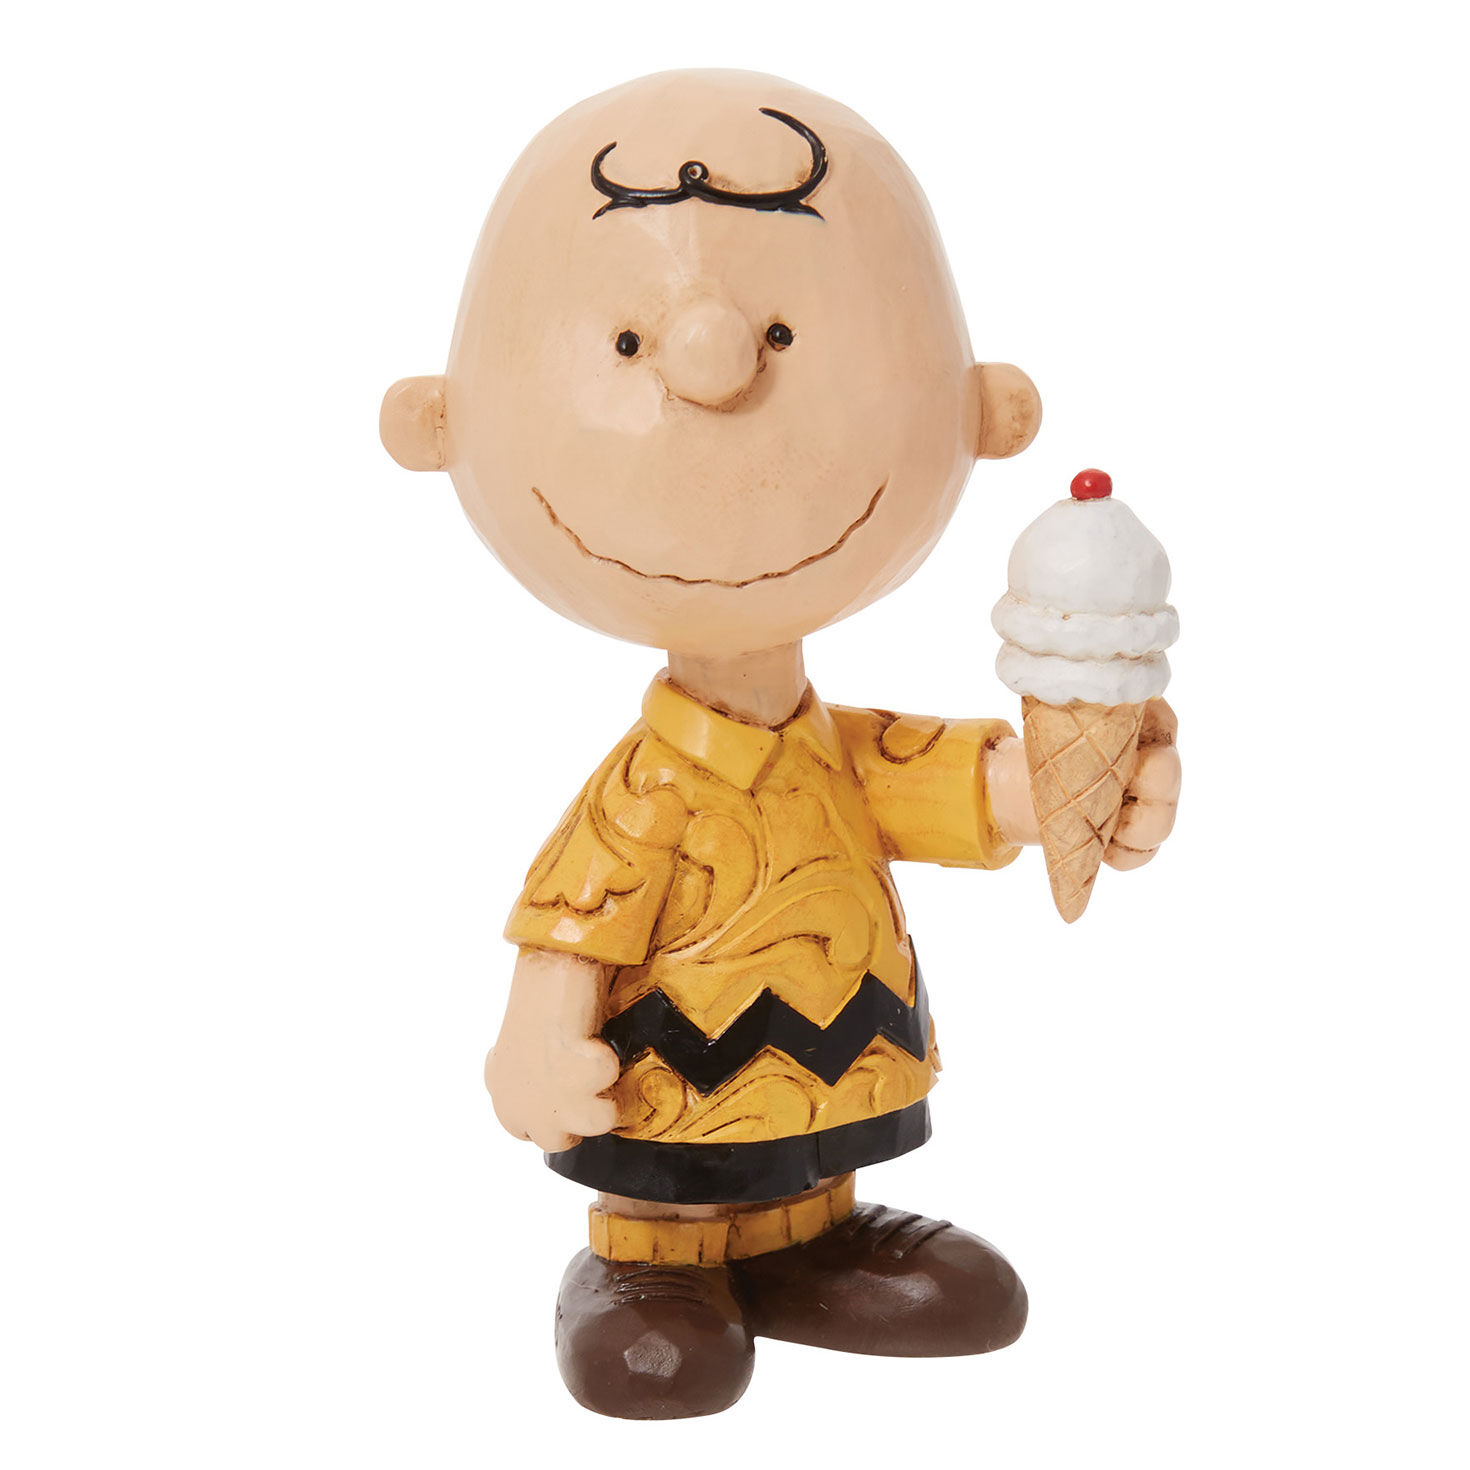 Jim Shore Peanuts Mini Charlie Brown With Ice Cream Cone Figurine, 3.25" for only USD 29.99 | Hallmark